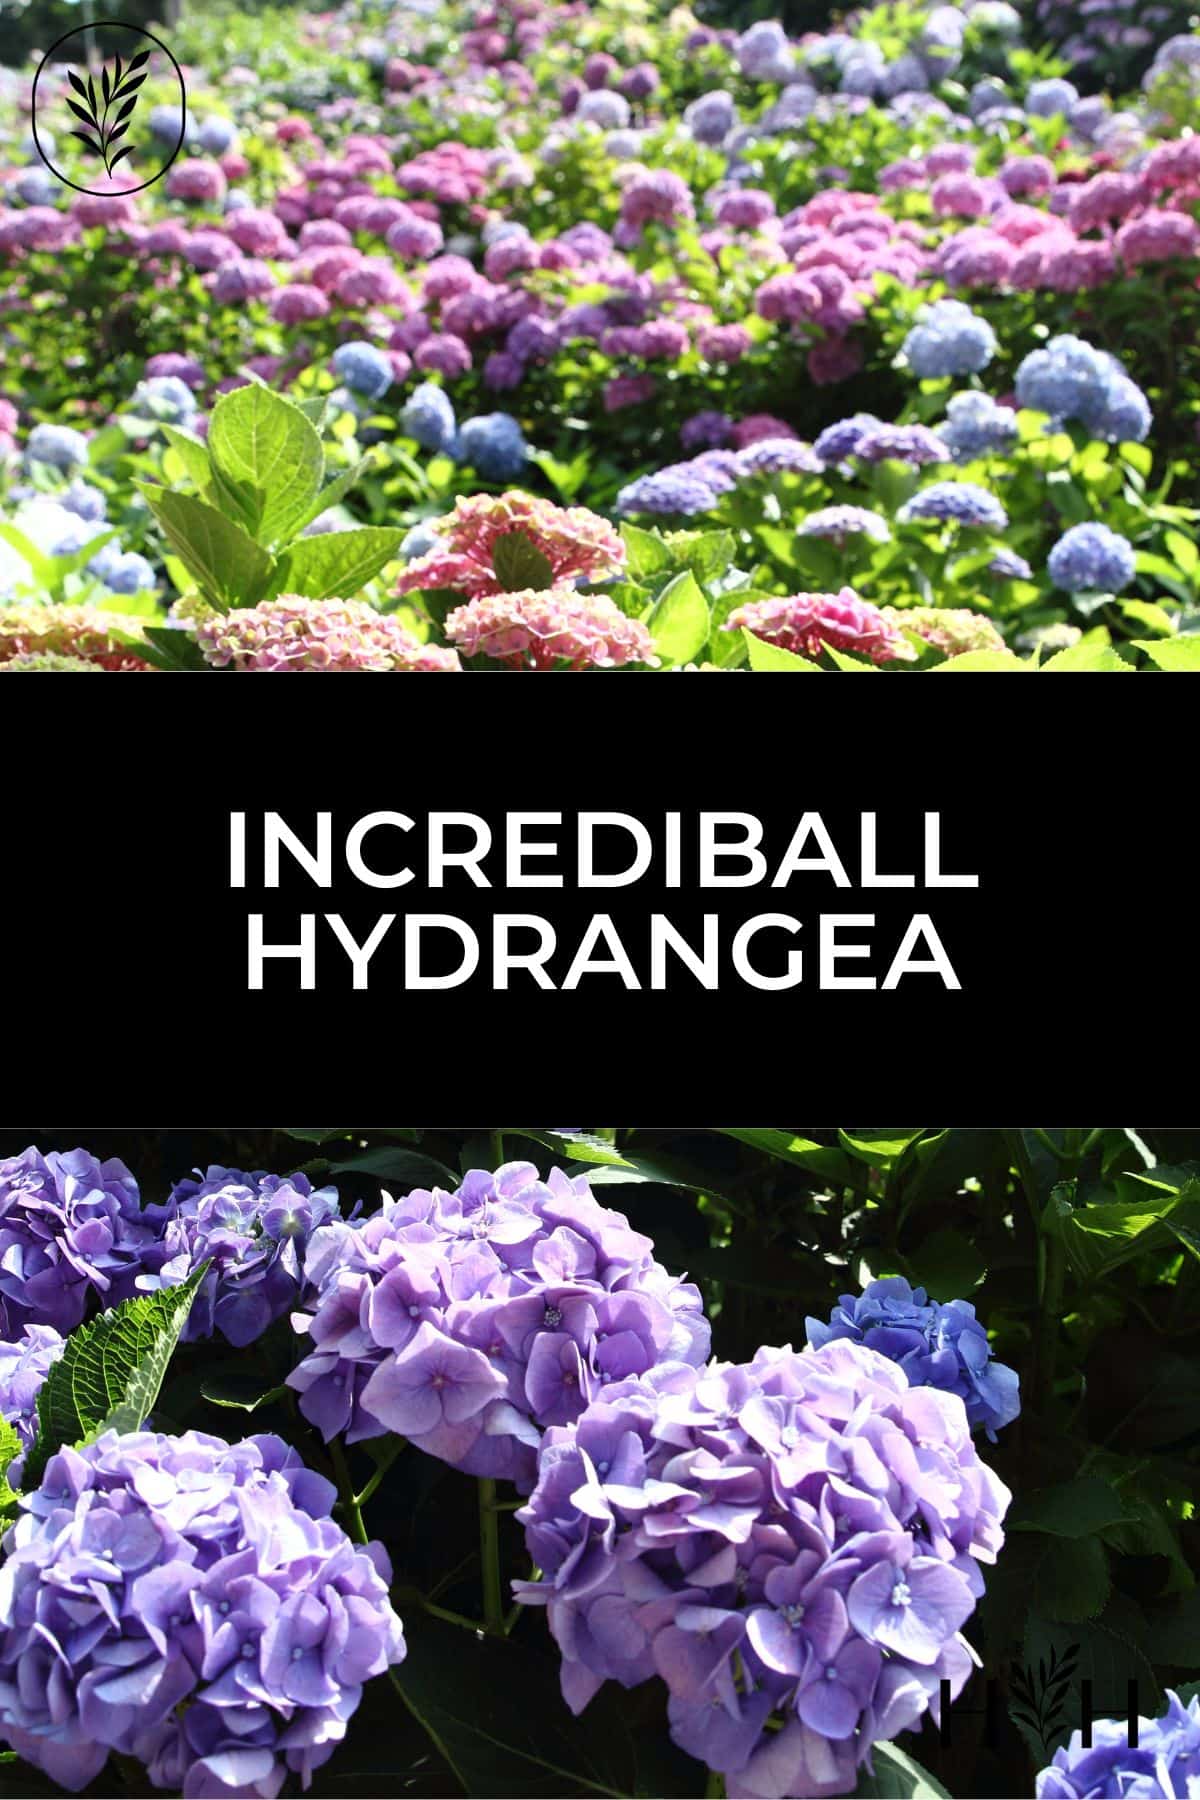 Incrediball hydrangea via @home4theharvest